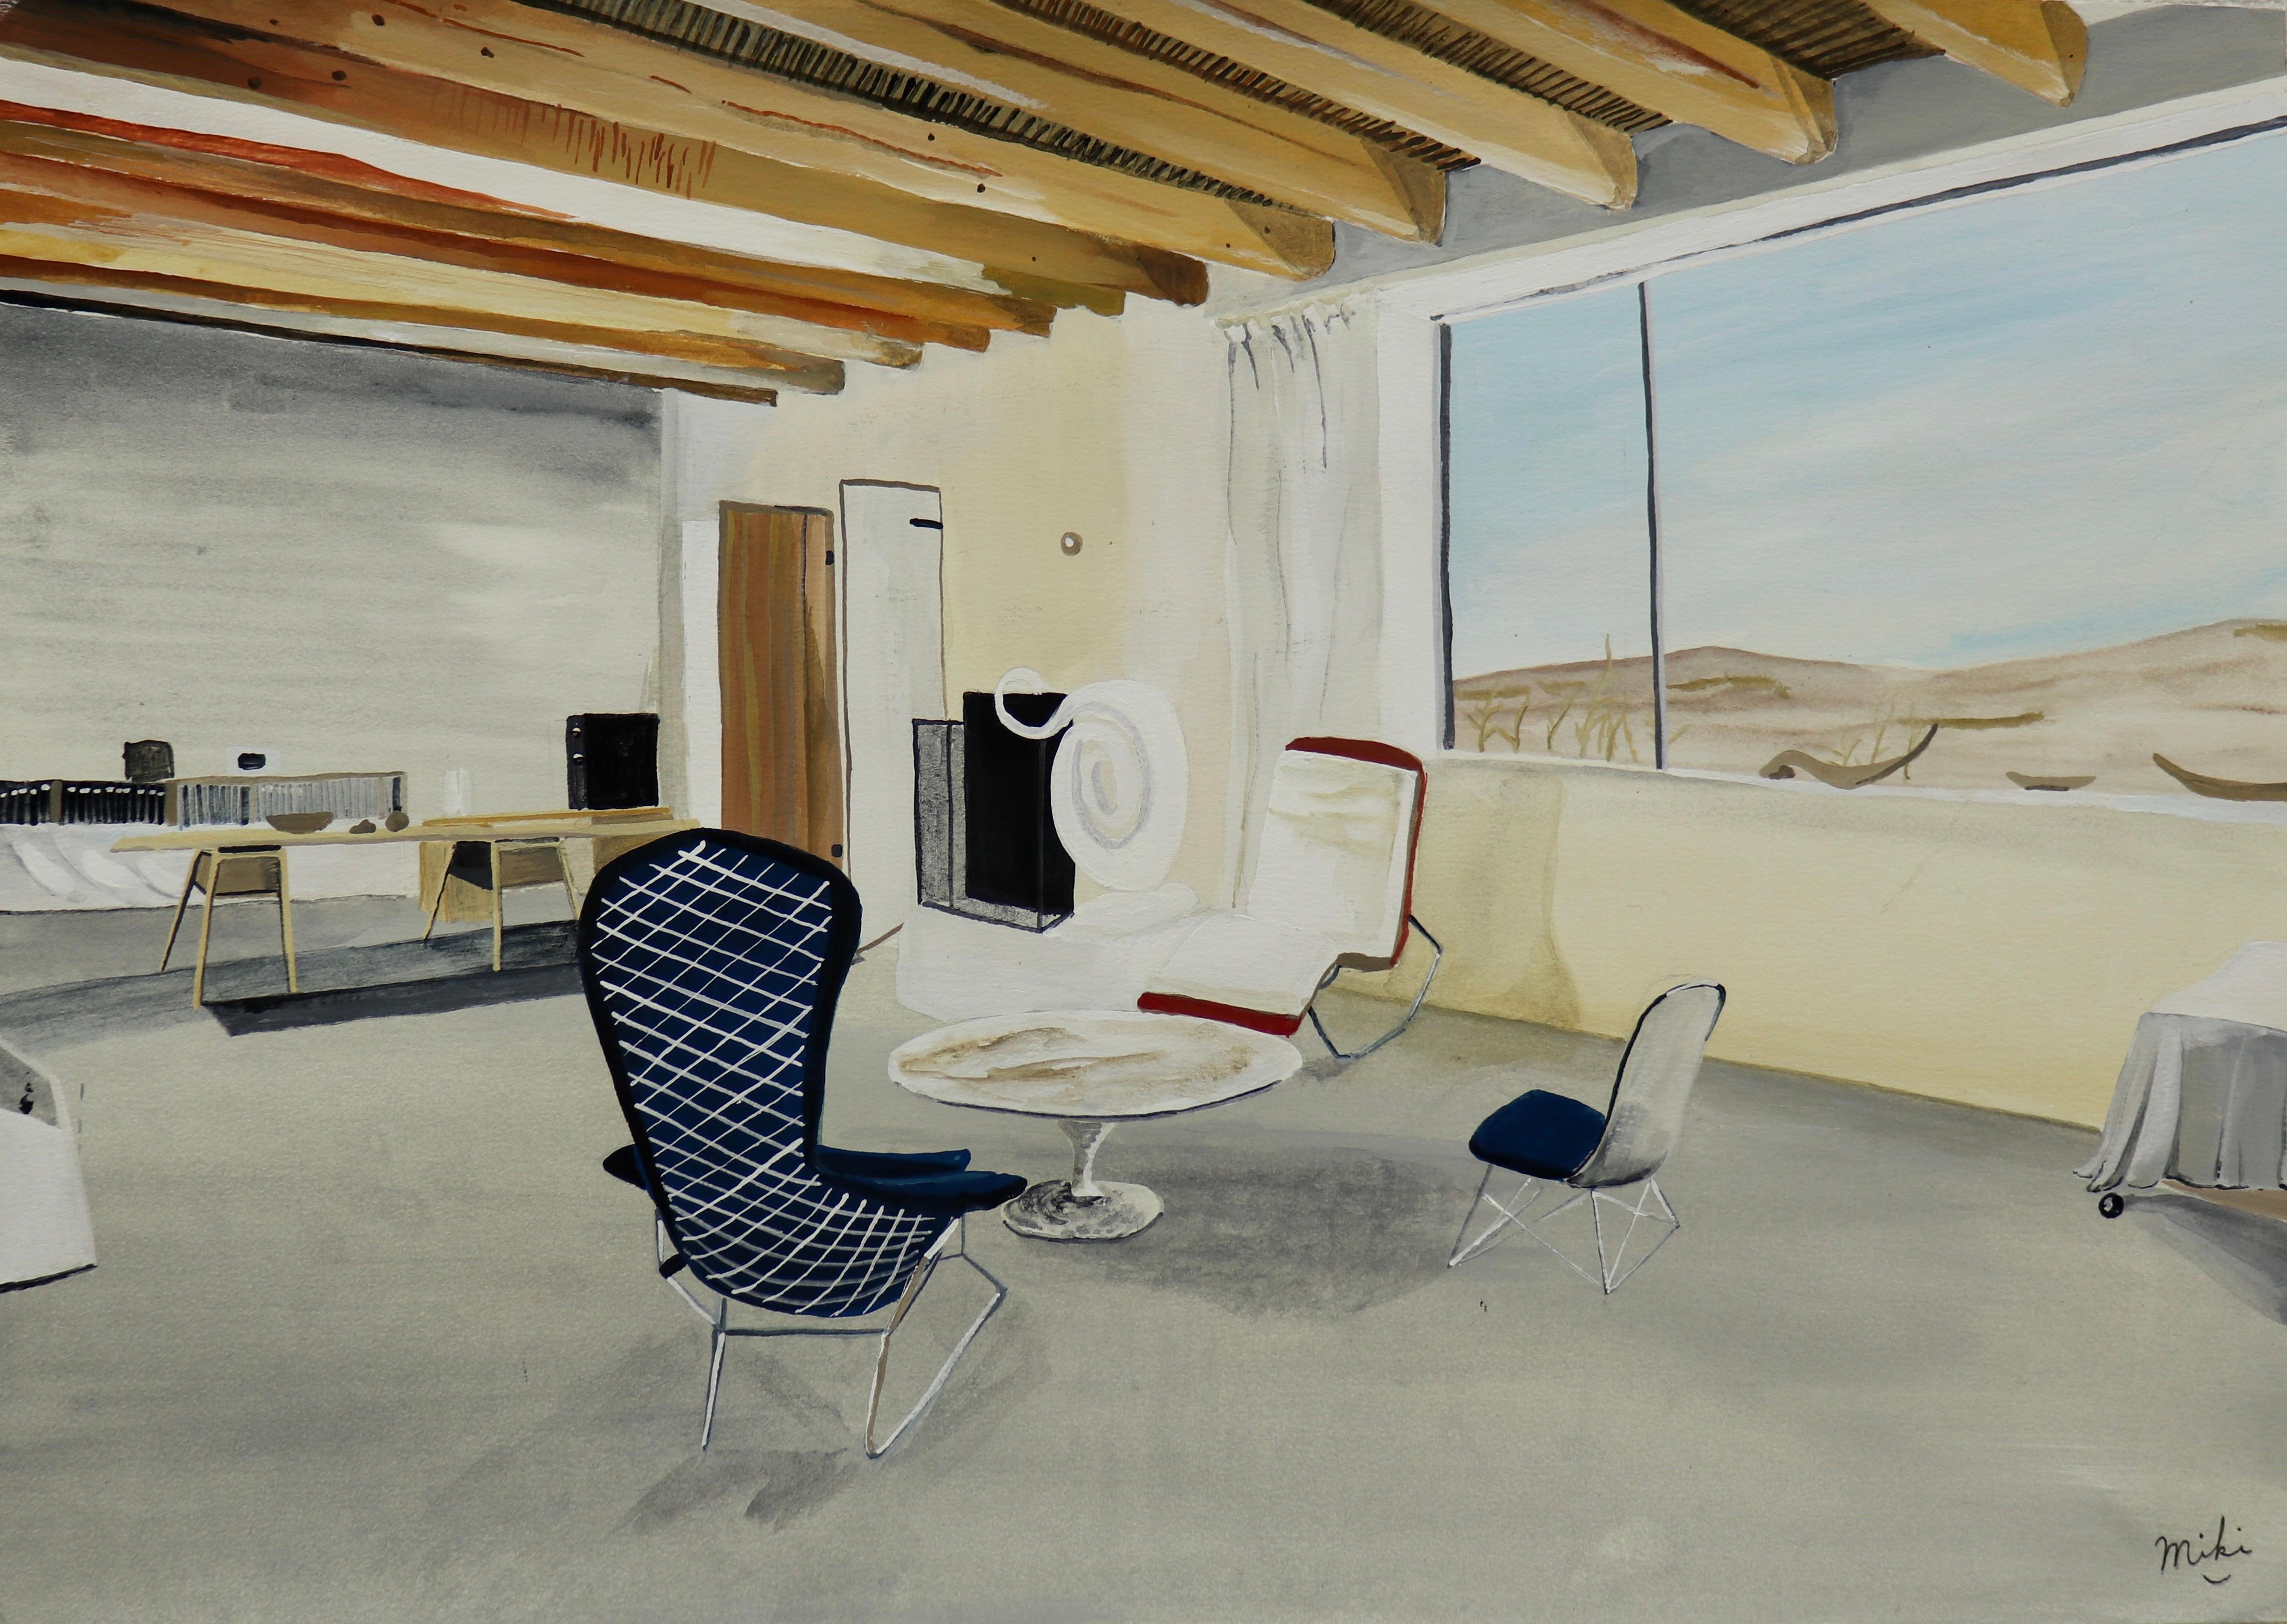 Georgia O'Keeffe's Studio & Fireplace, interiors, desert landscape, earth tones